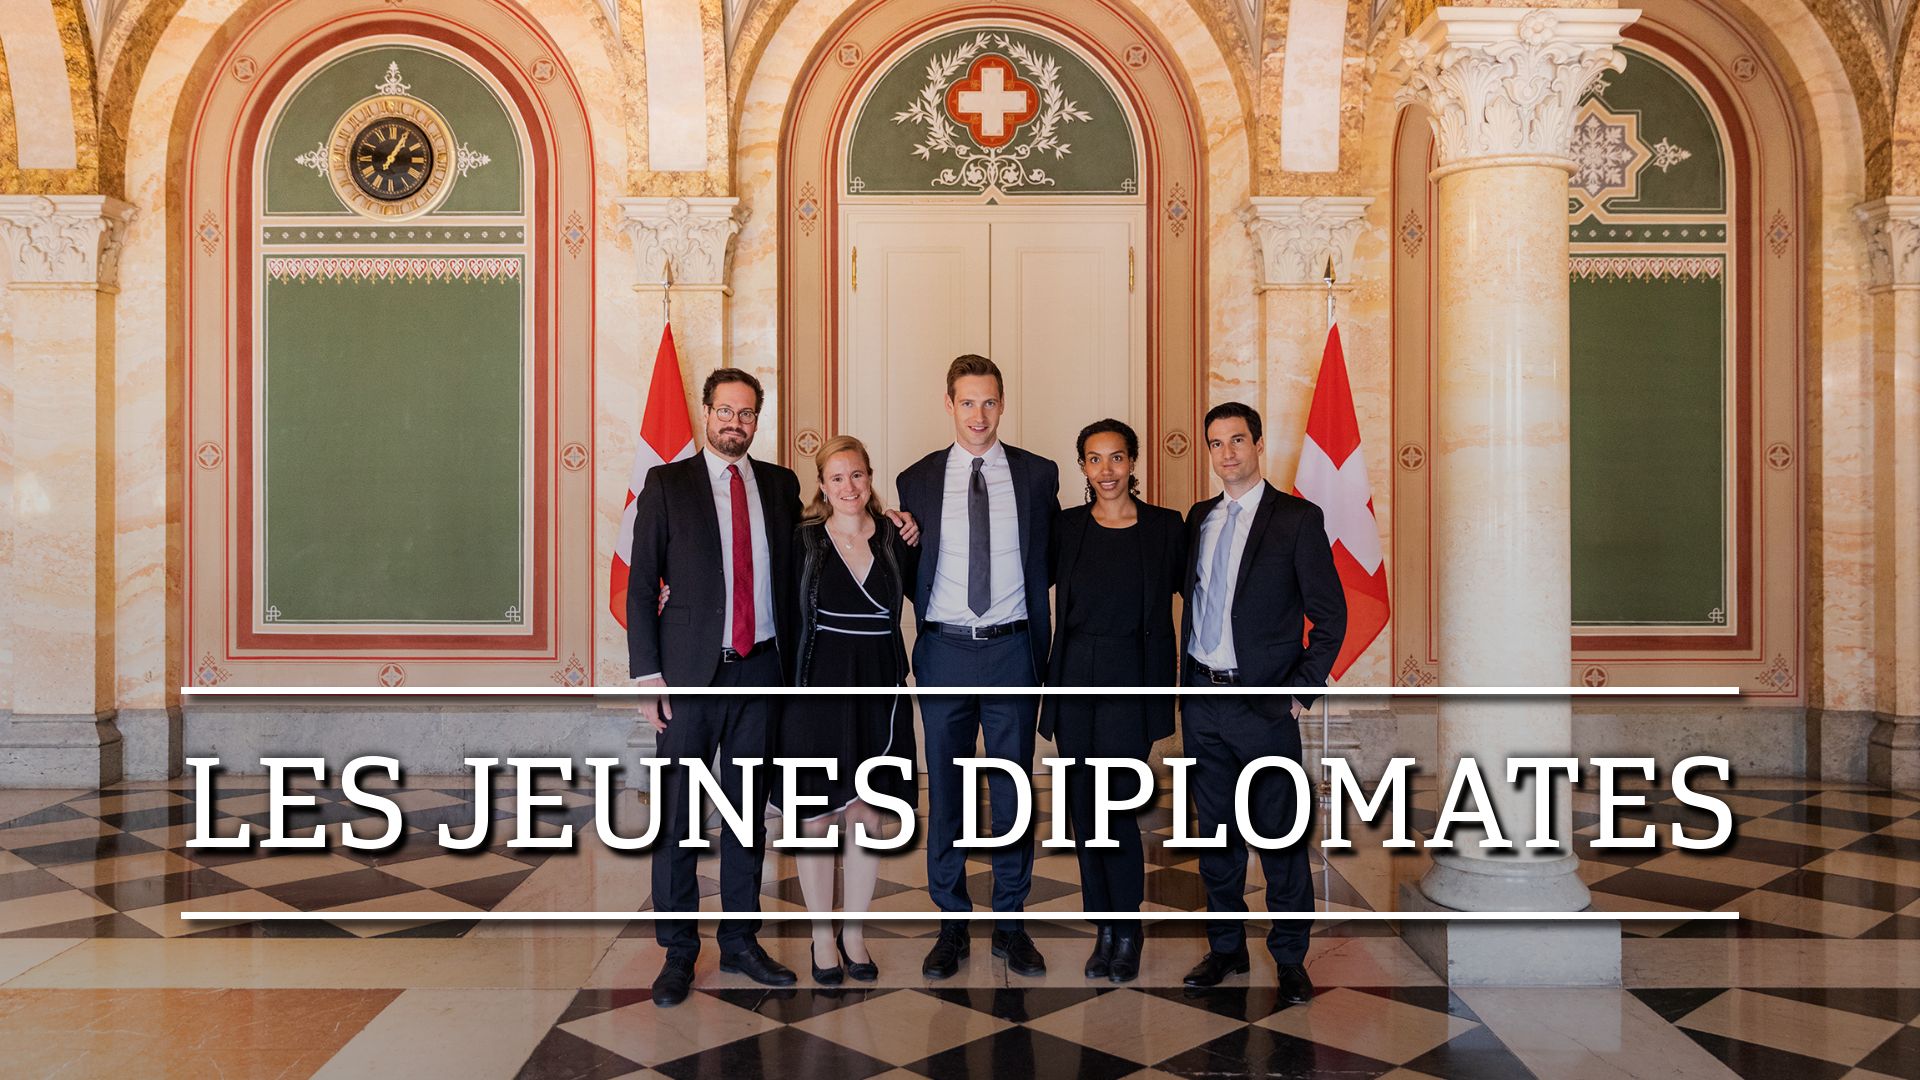 Les jeunes diplomates